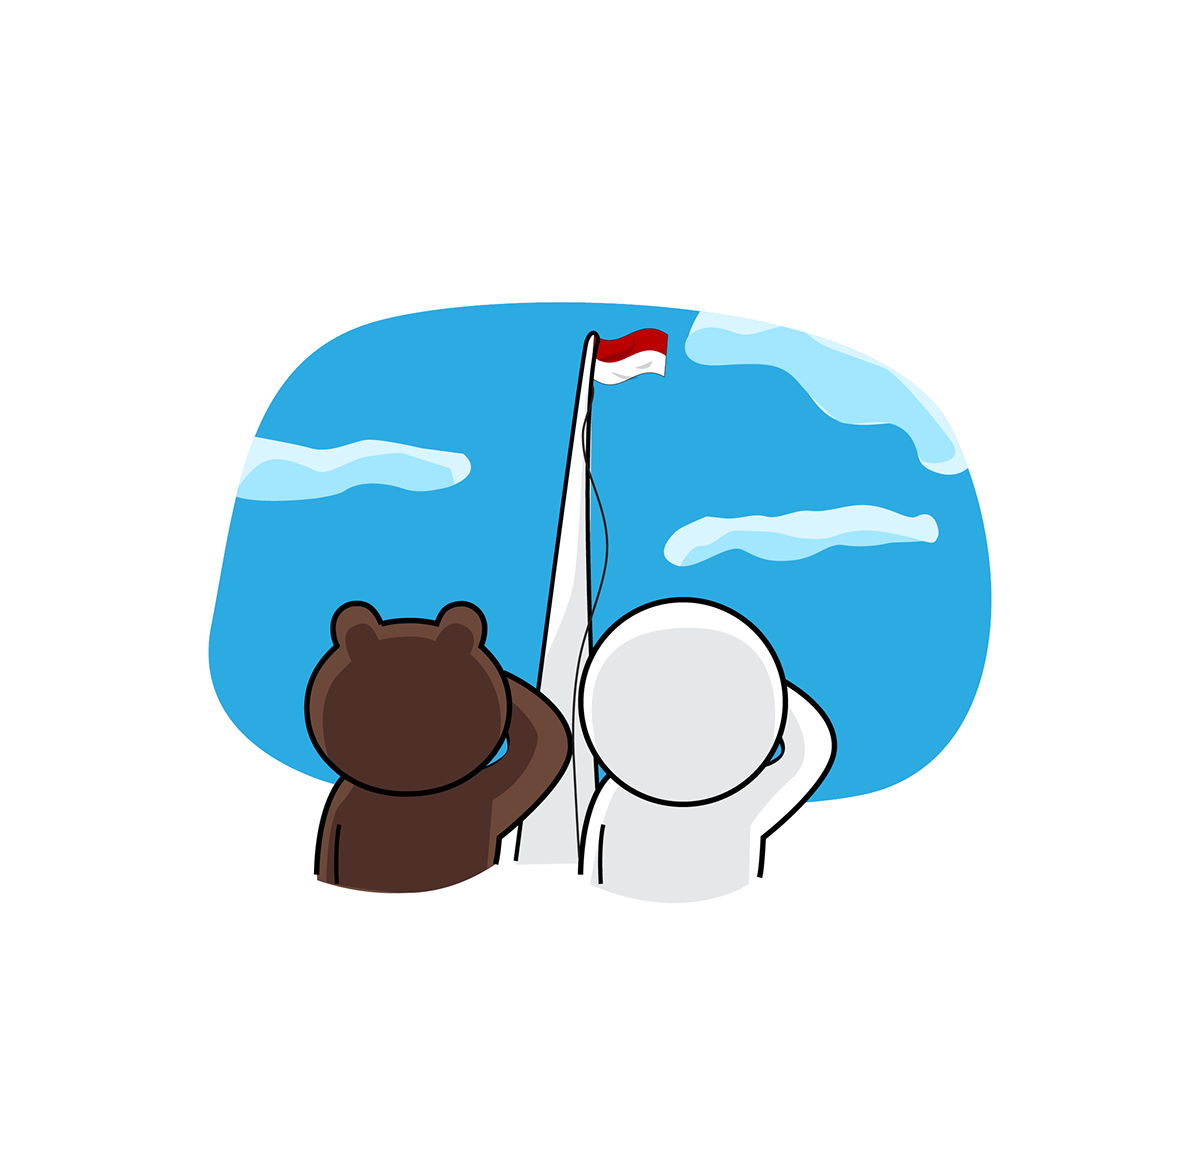 sticker line indonesia 17 Agustus independence day sabang-merauke Landmark monas malin kundang brown james moon Cony